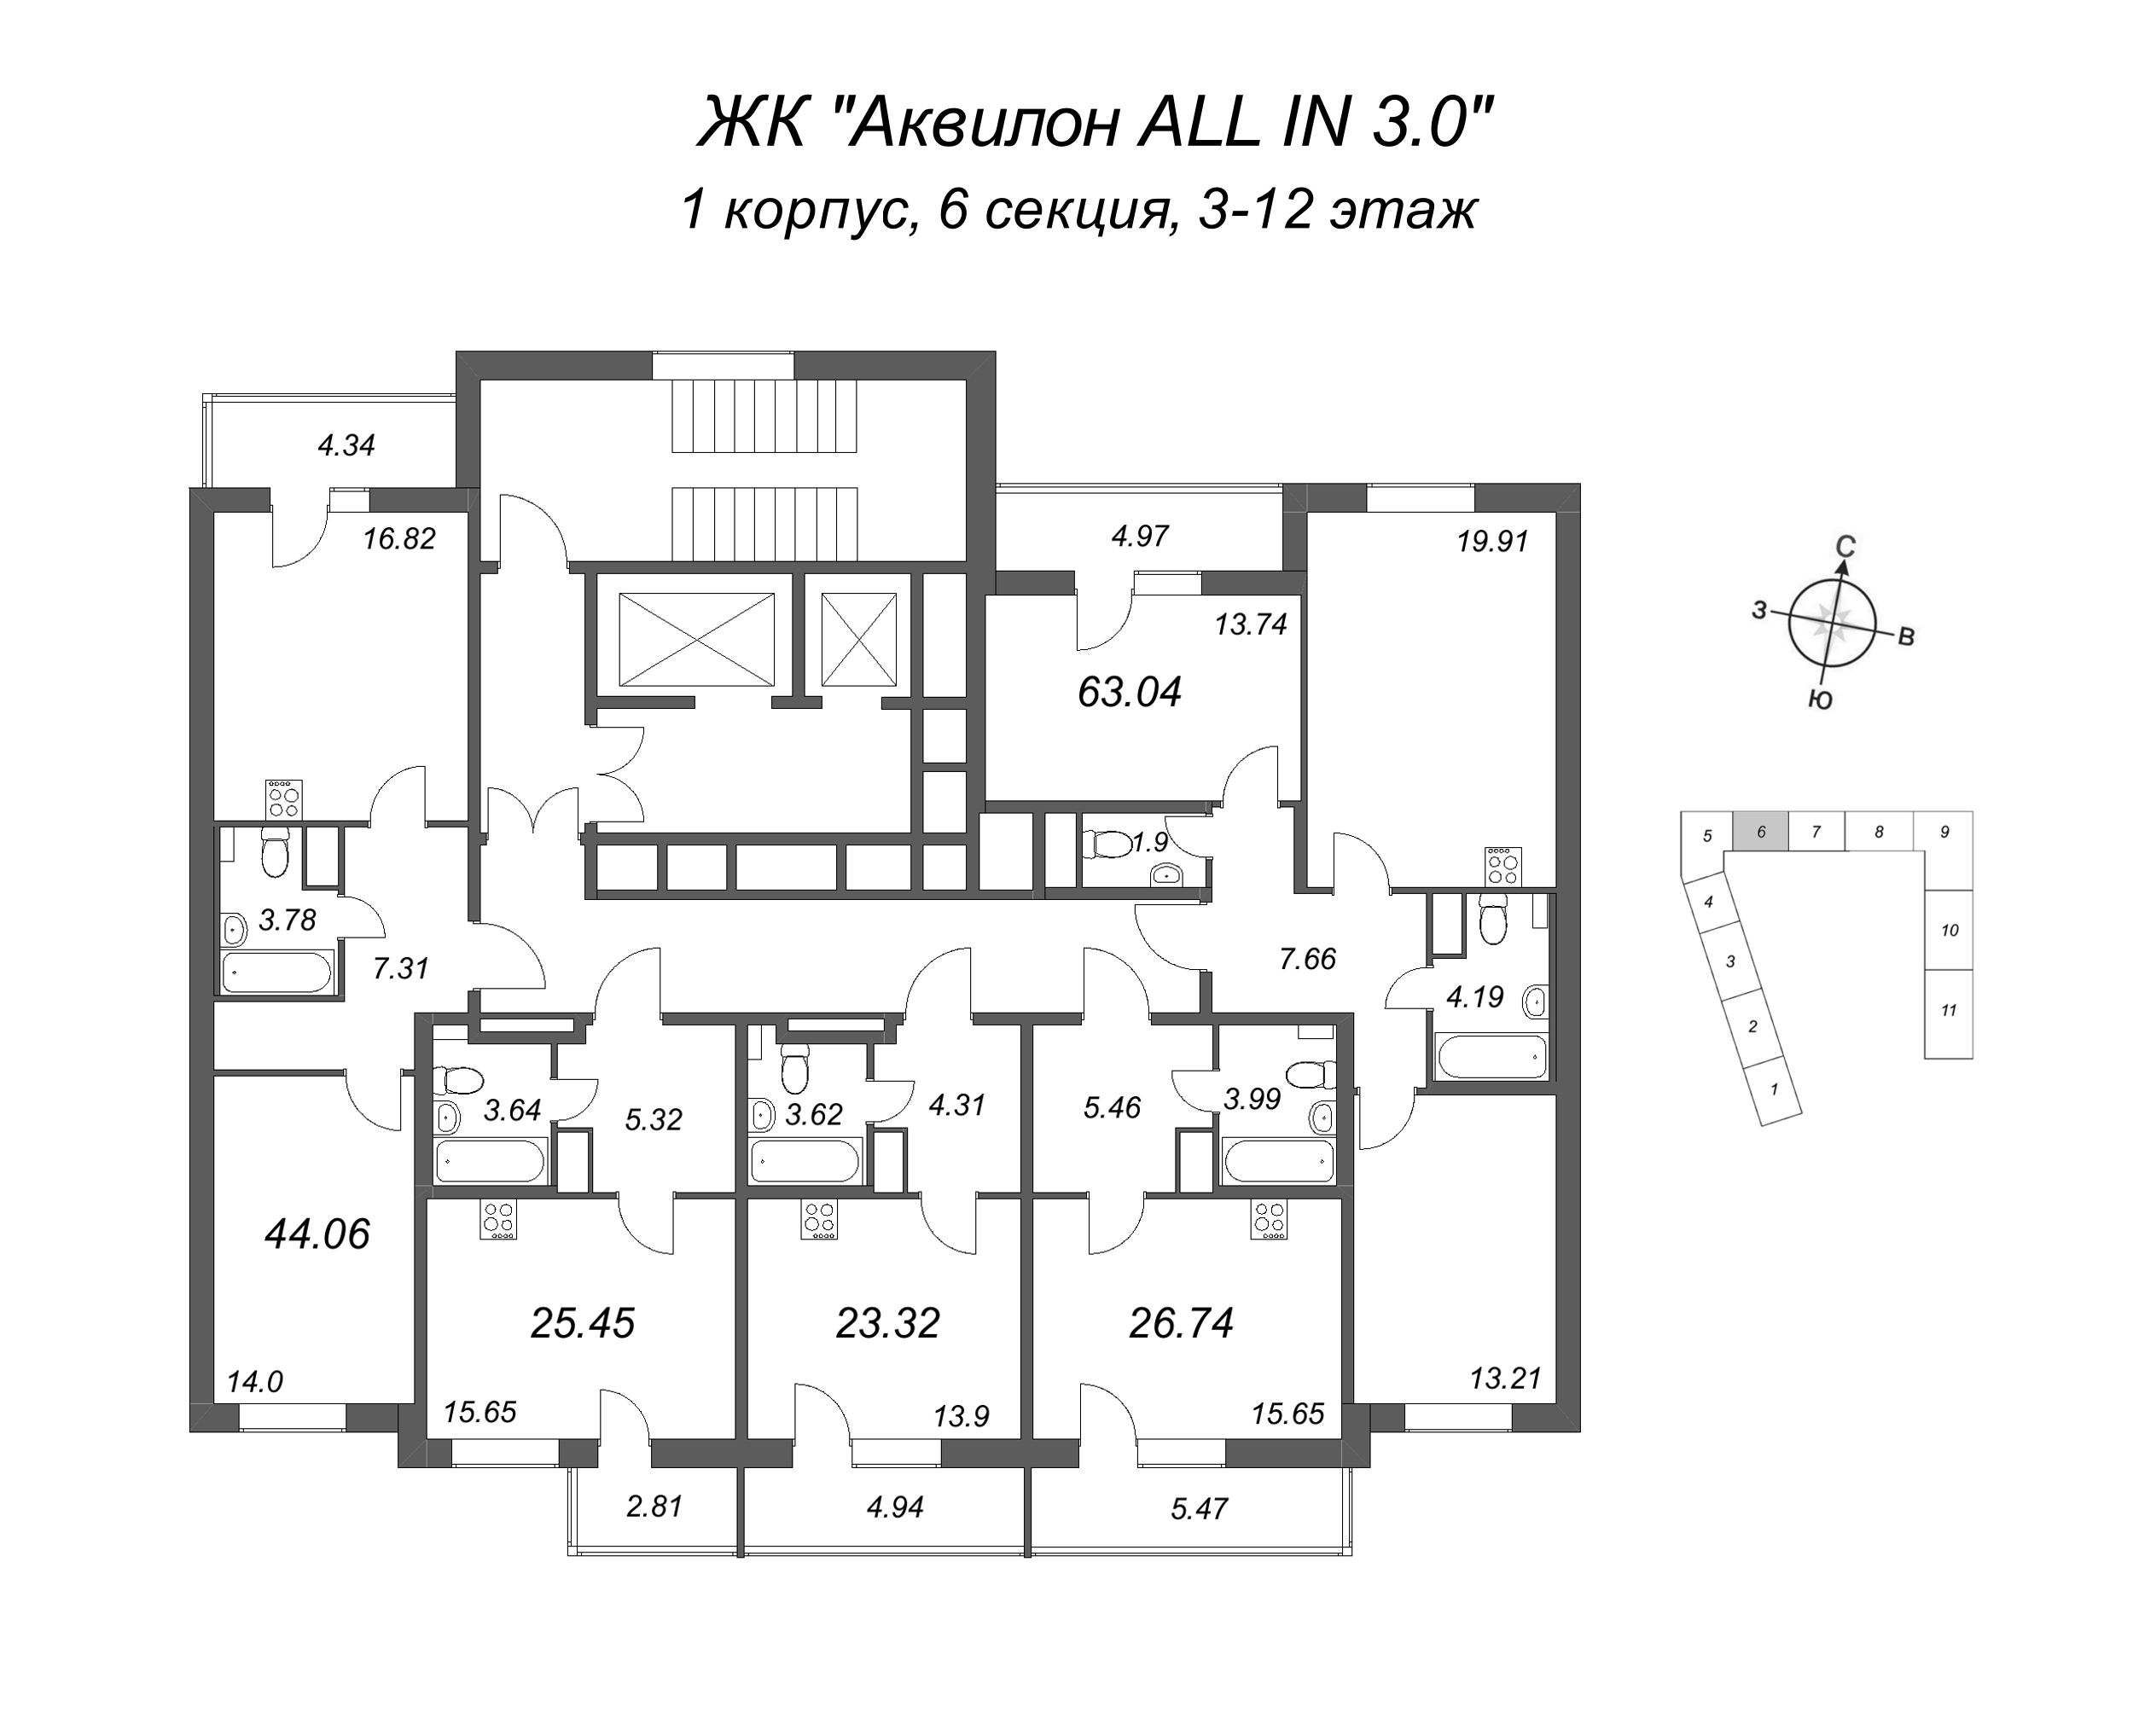 3-комнатная (Евро) квартира, 63.04 м² - планировка этажа